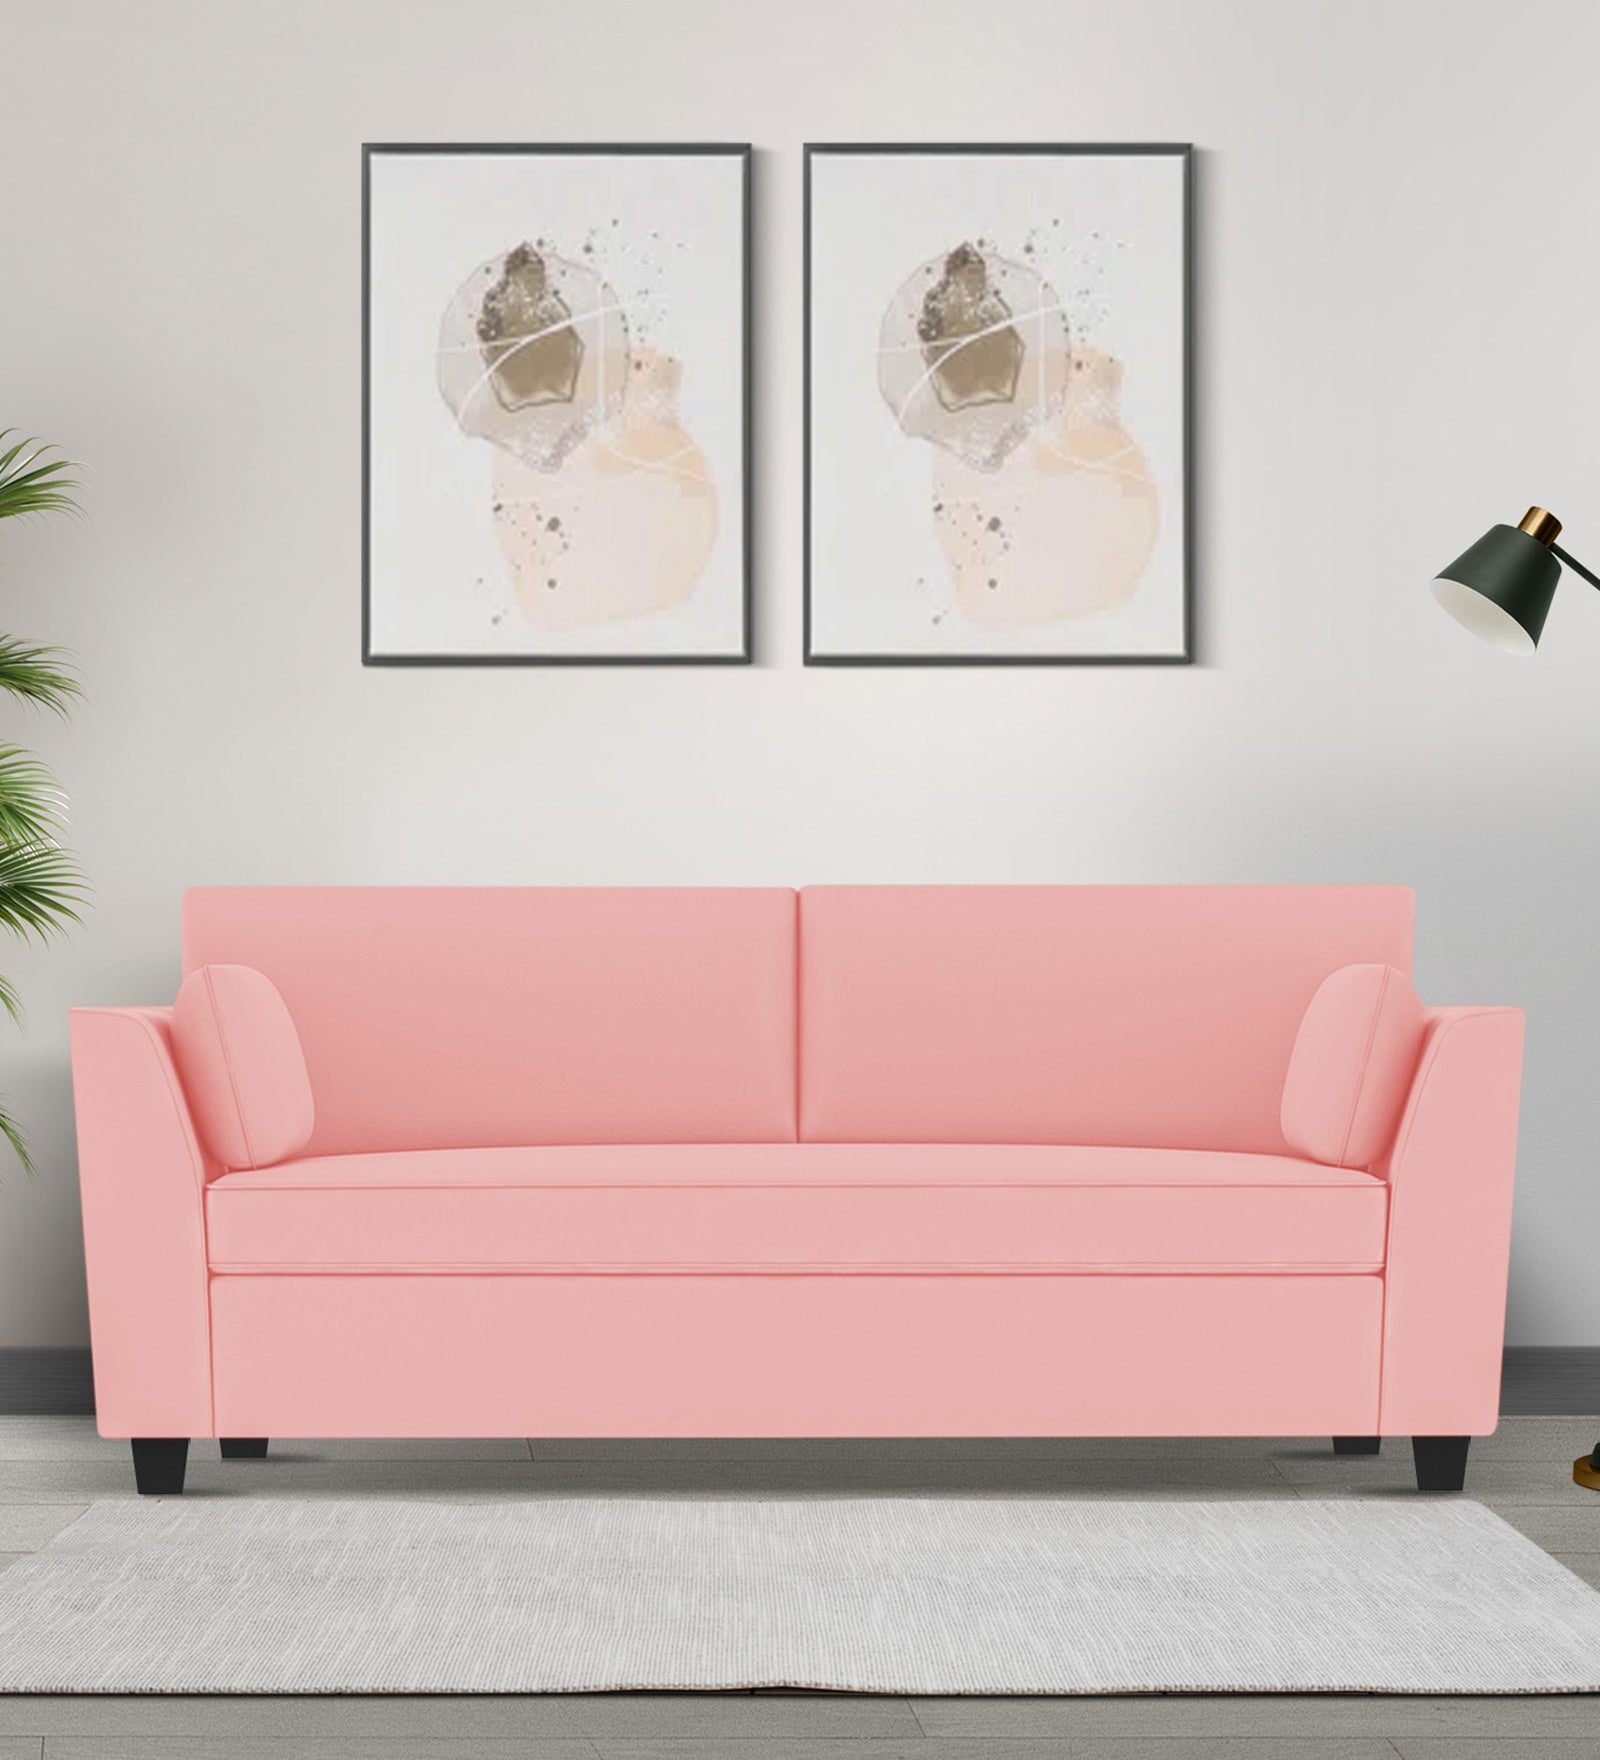 Bristo Velvet 3 Seater Sofa in millennial pink Colour With Storage